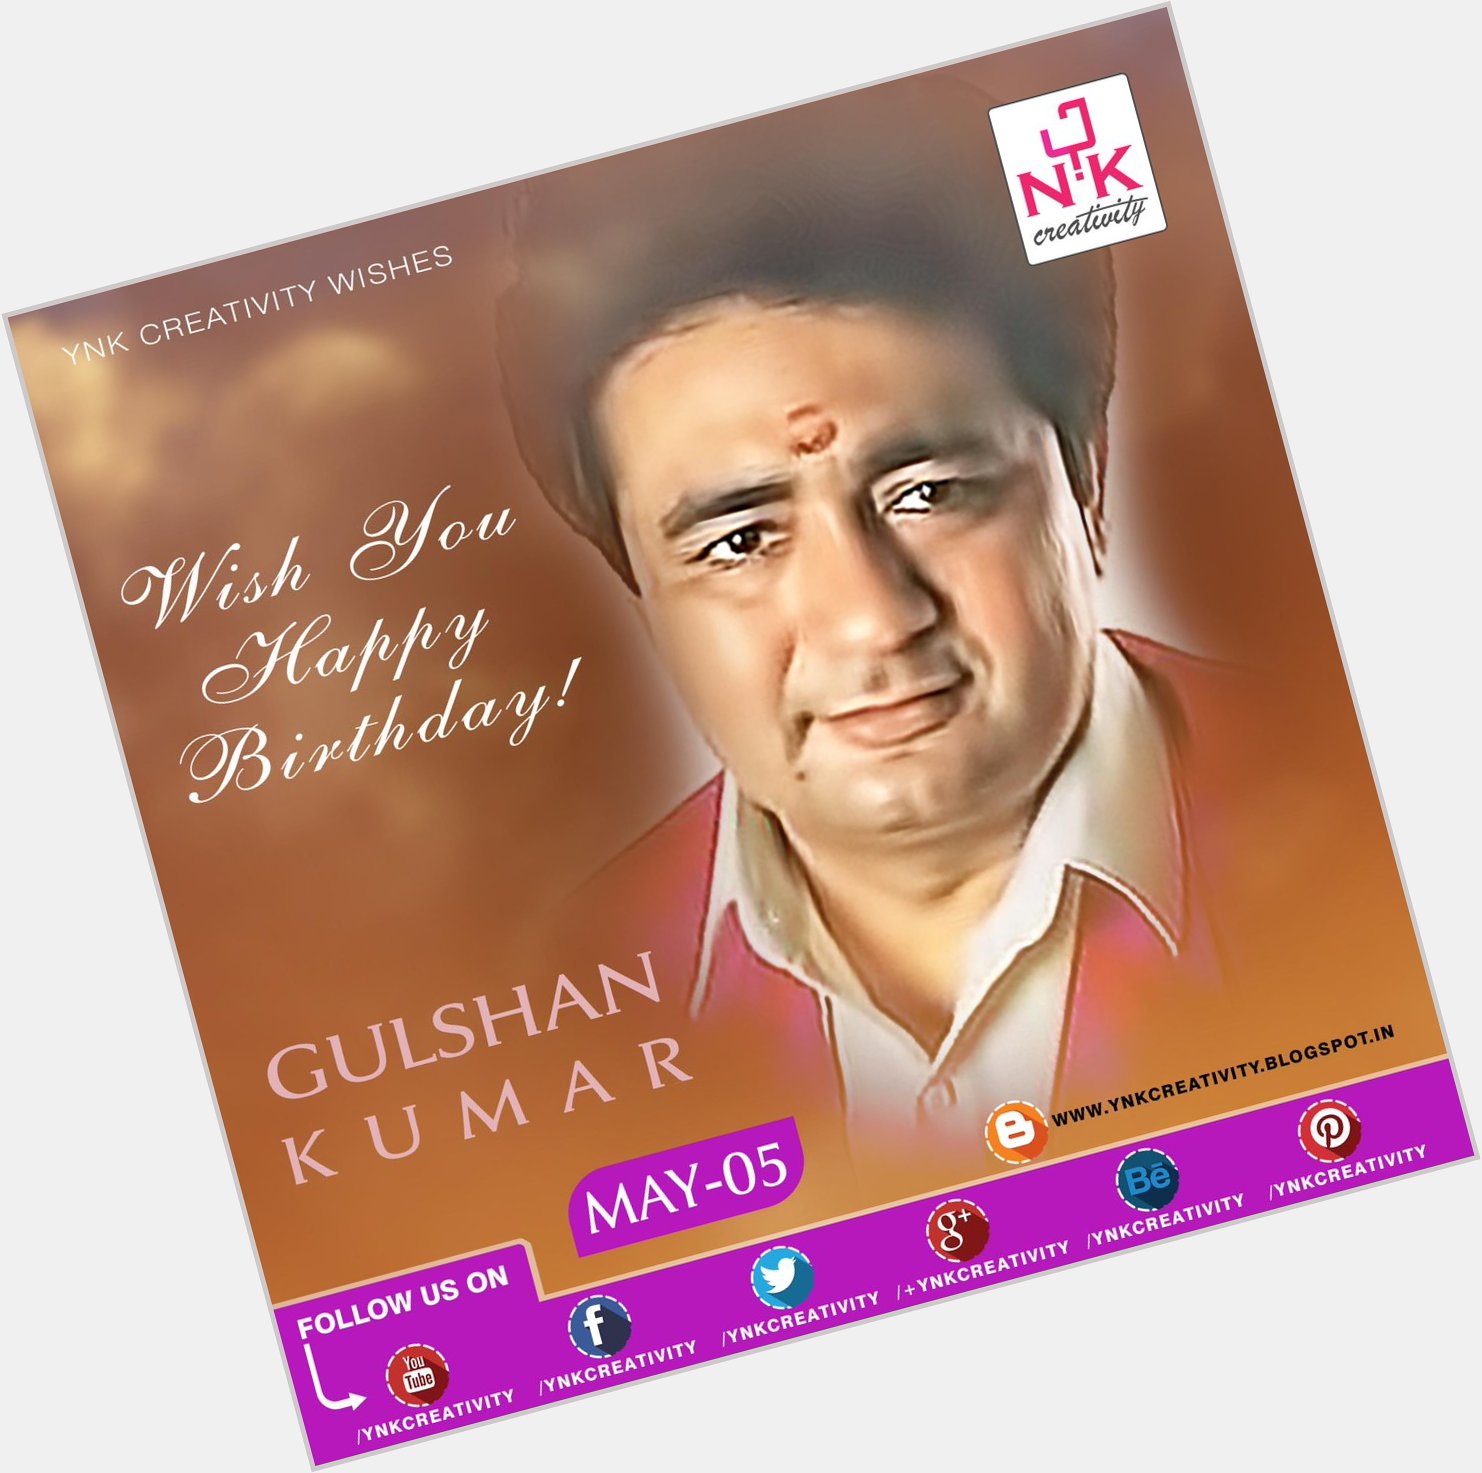 YNK Creativity wishes Happy Birthday to
Gulshan Kumar 